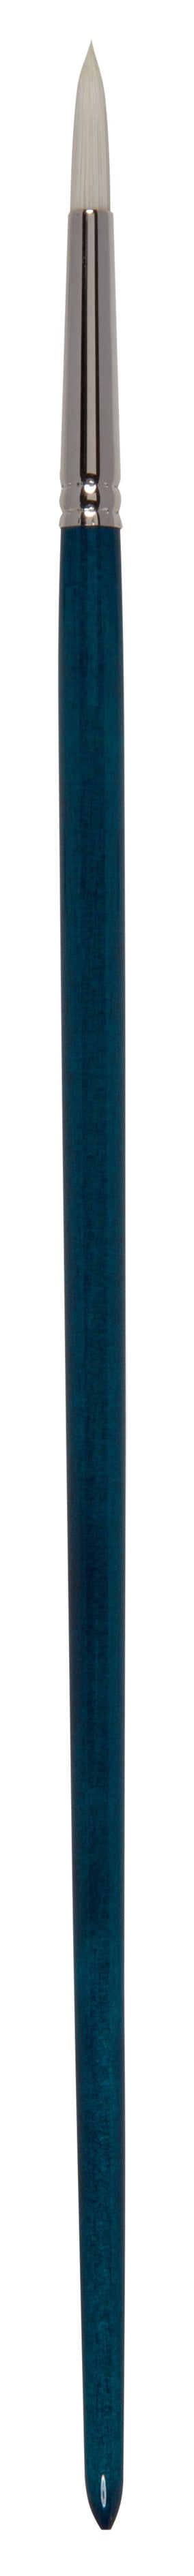 Zahn Acrylic Brush Round, Infinity, 9975 Size 1